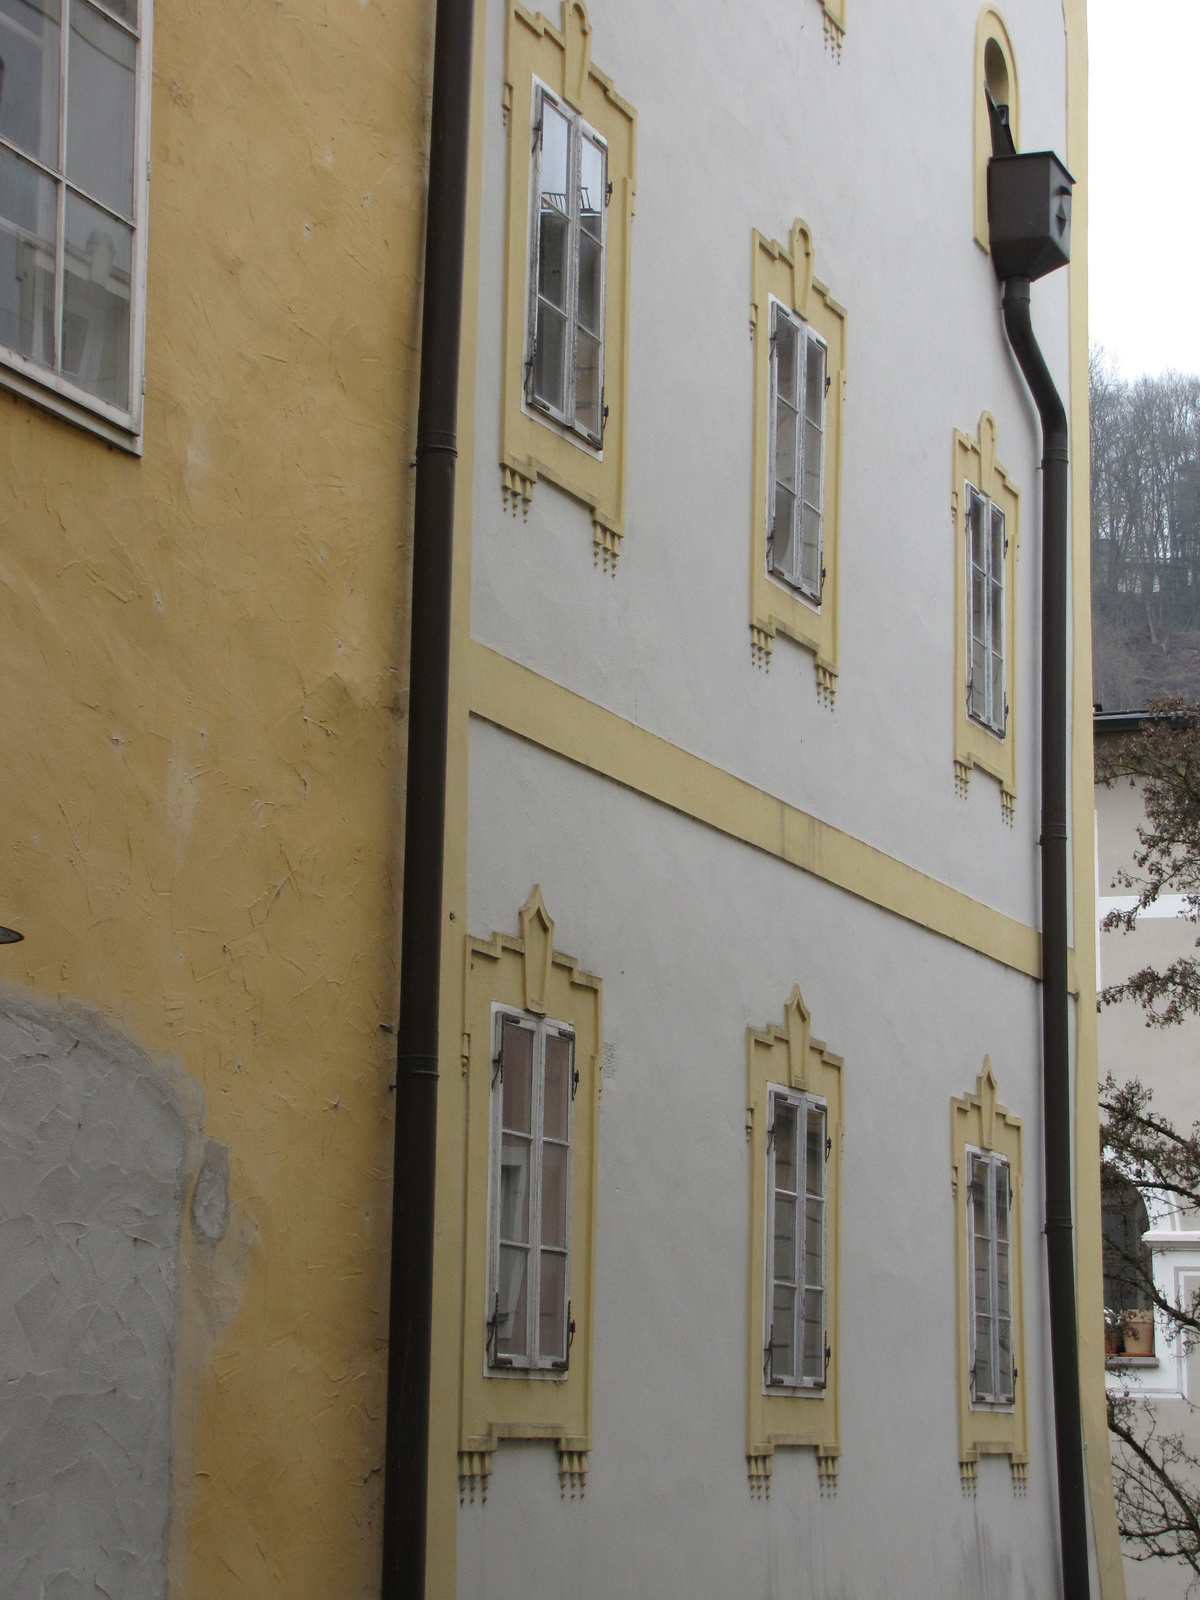 Passau, SzG3